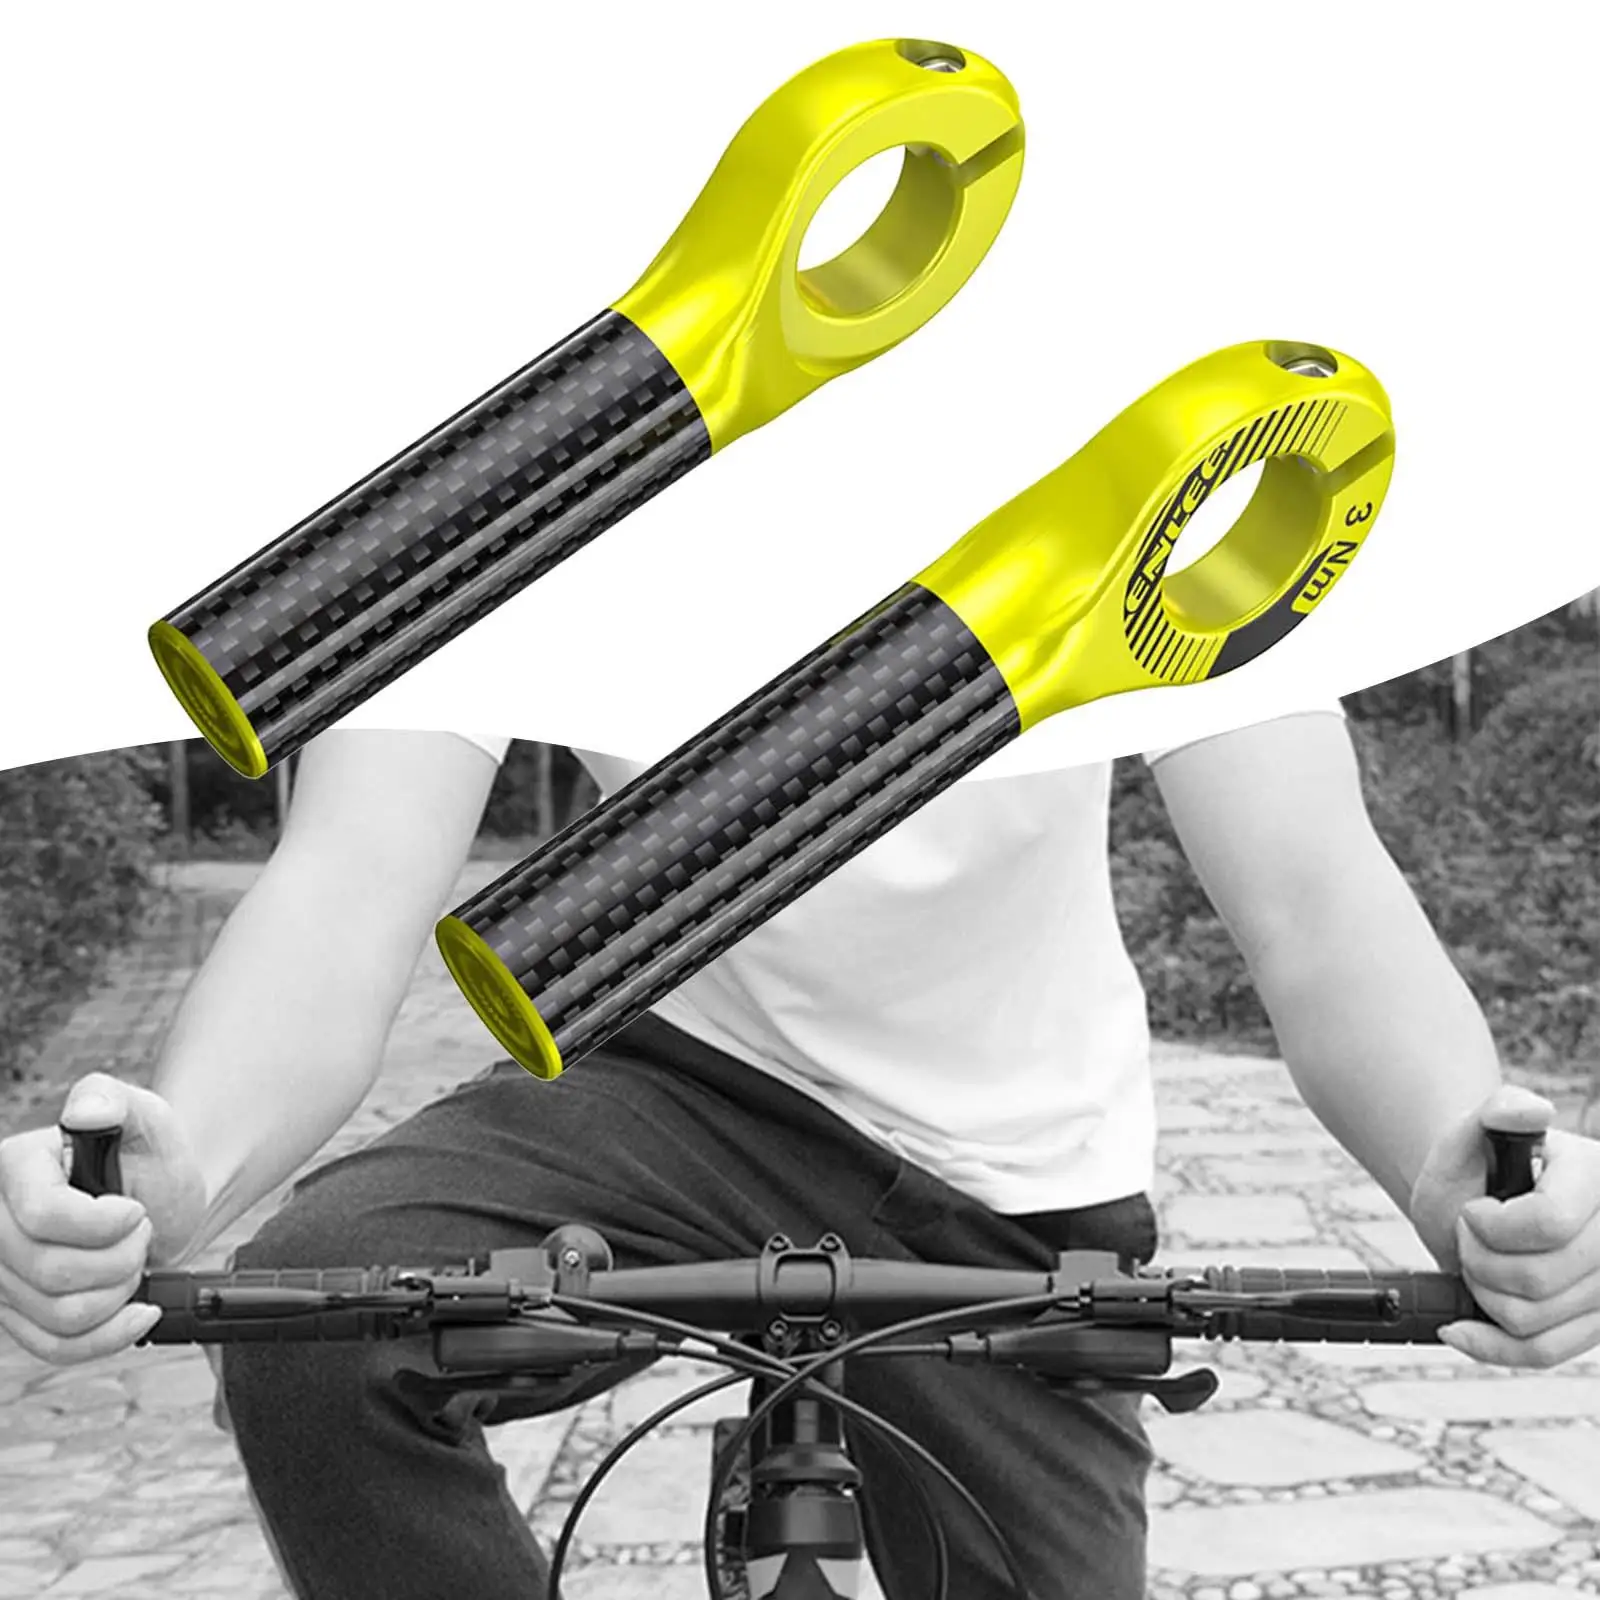 2Pcs Mountain Bike Handlebar Ends High Strength Comfortable Wear Resistant Handle Bar Grips for Folding Bike Cycling Replacement